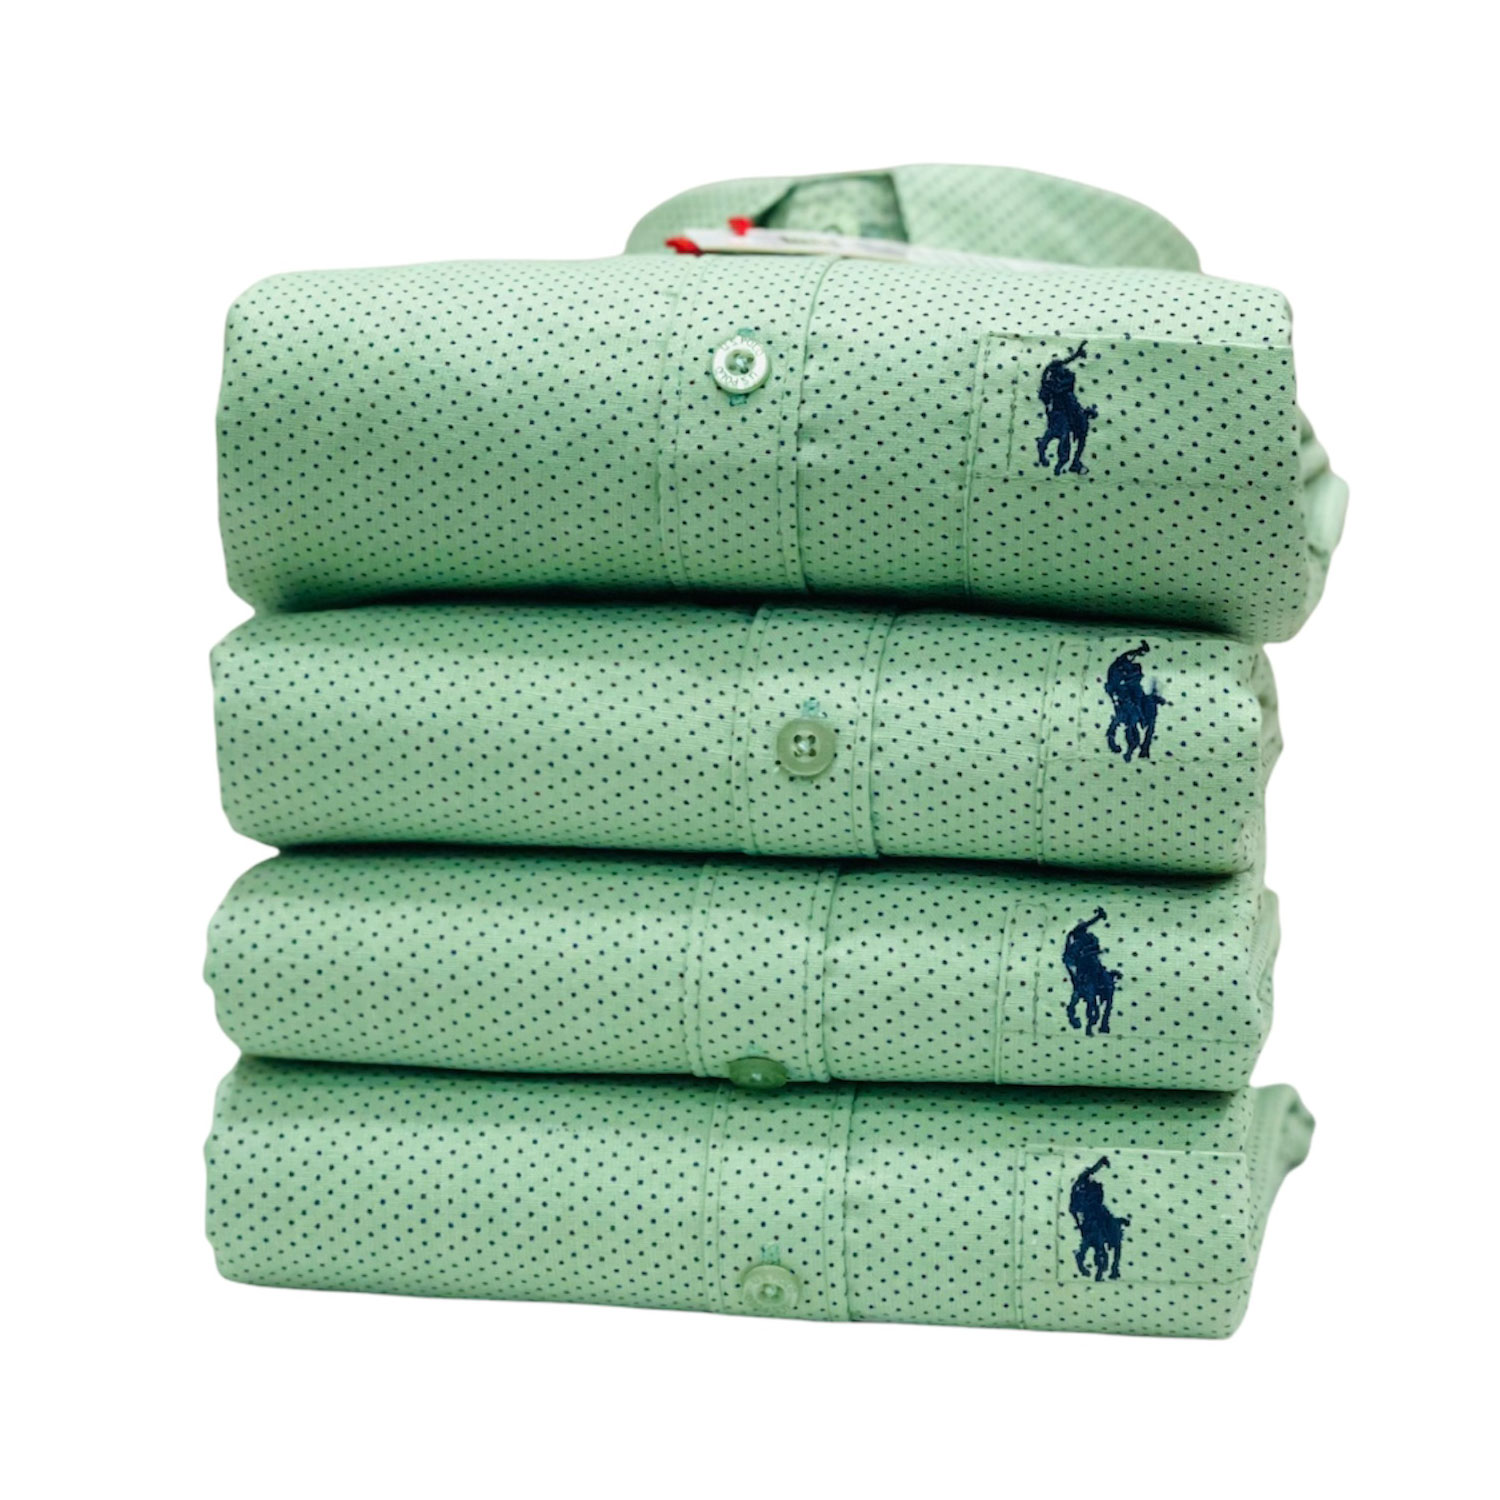 Men's Cotton U.S Polo Shirts